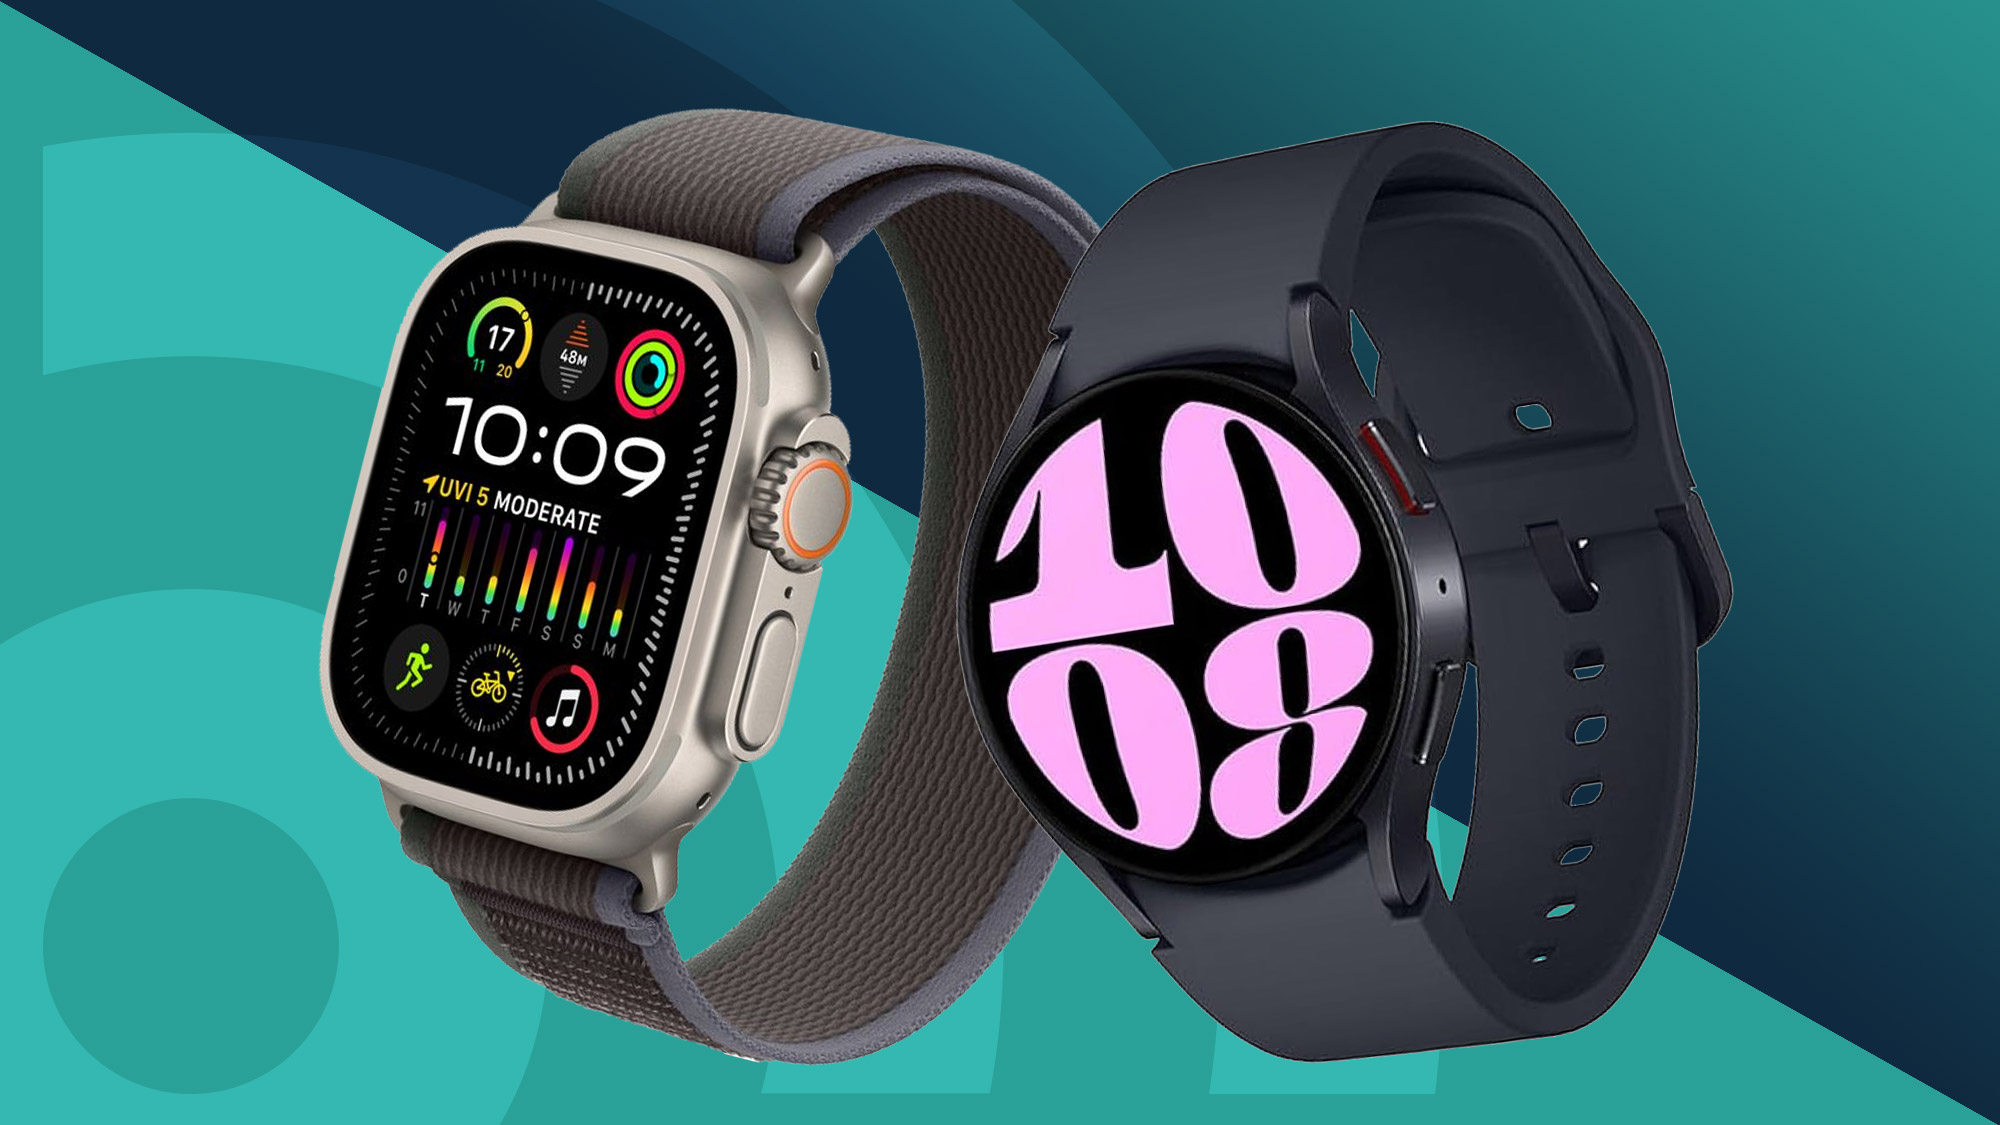 Apple Watch Series 5 Review: The Best Smartwatch Is Now A Better Watch -  Tech